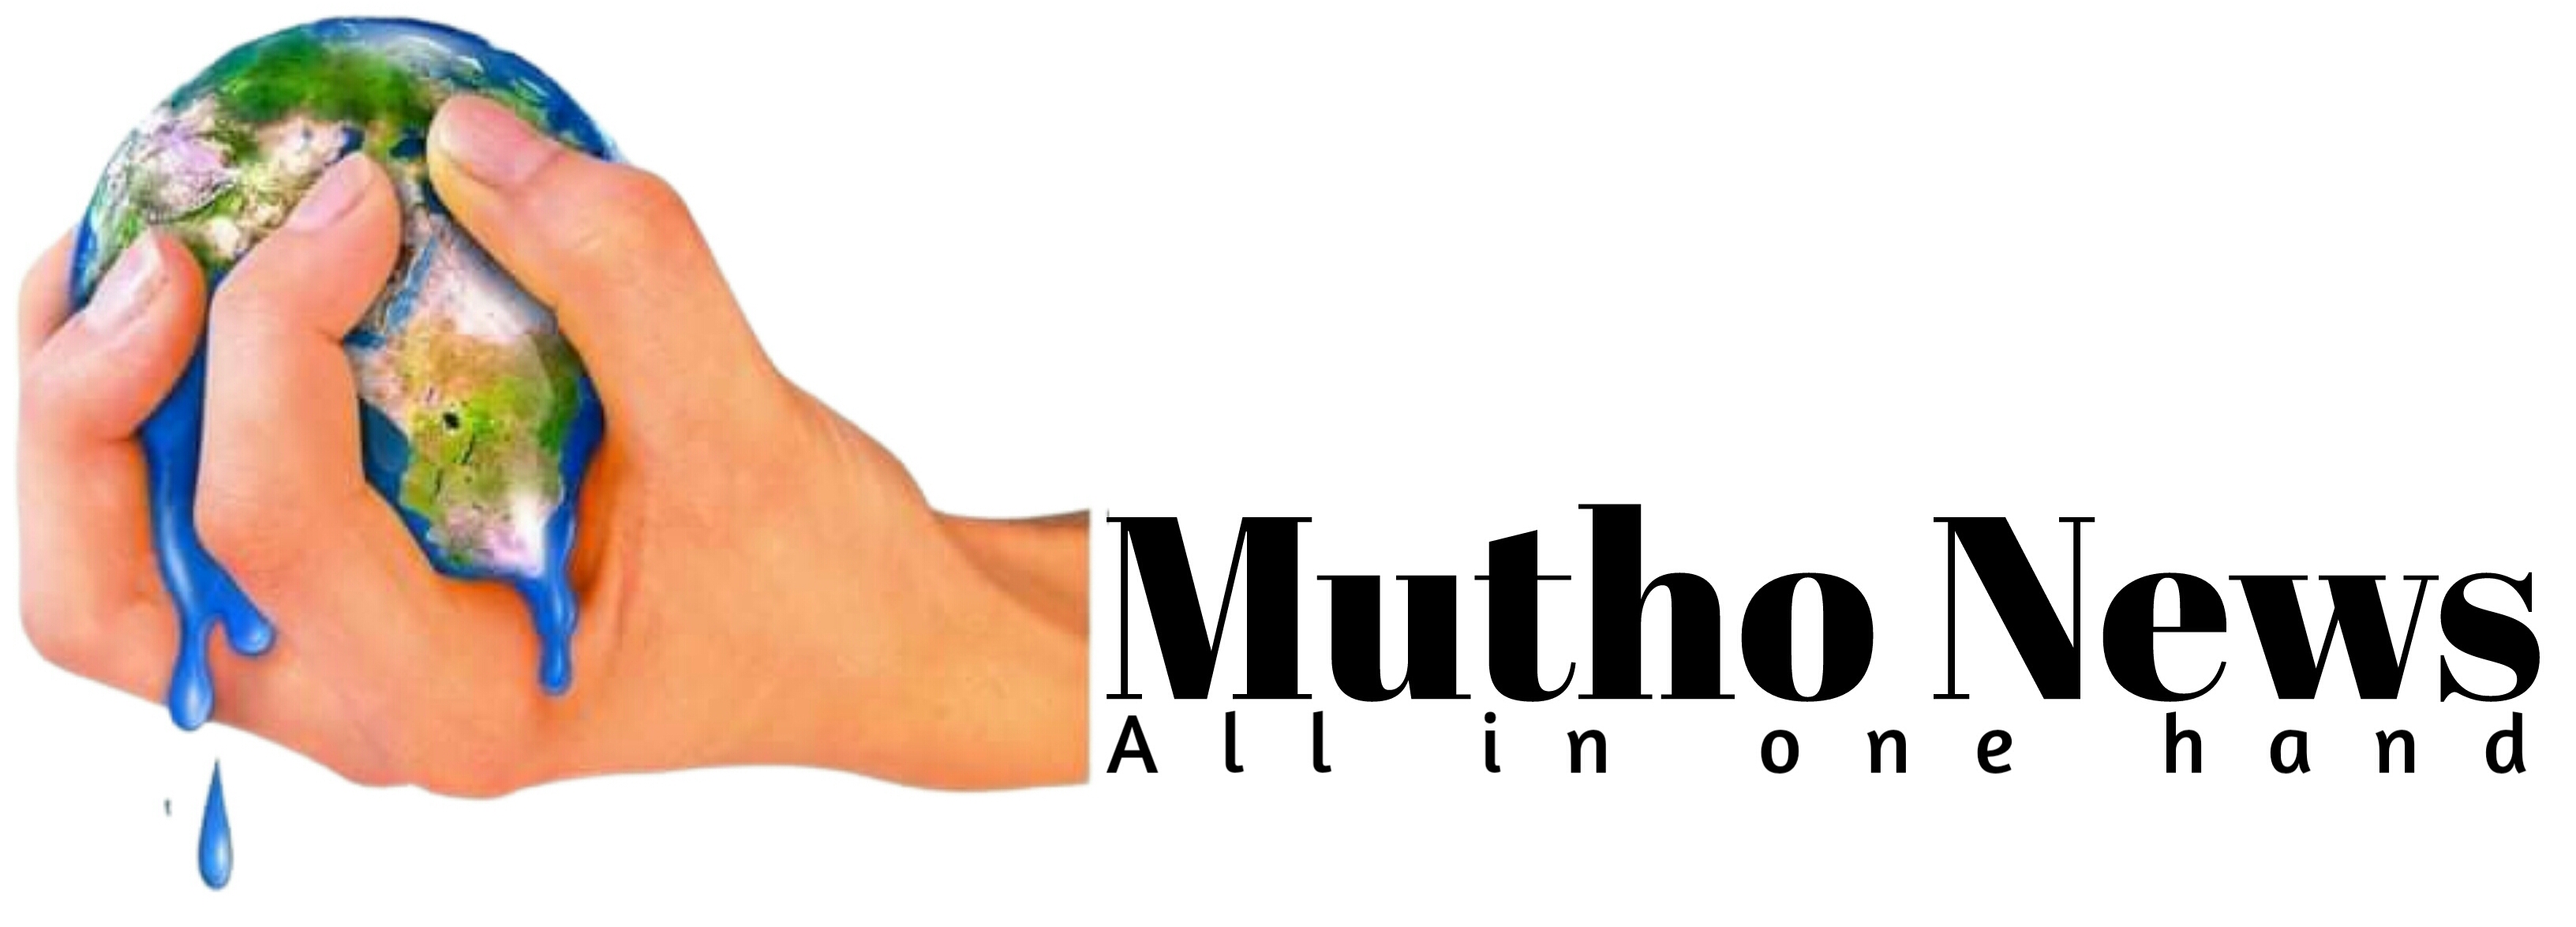 Mutho News logo.jpg